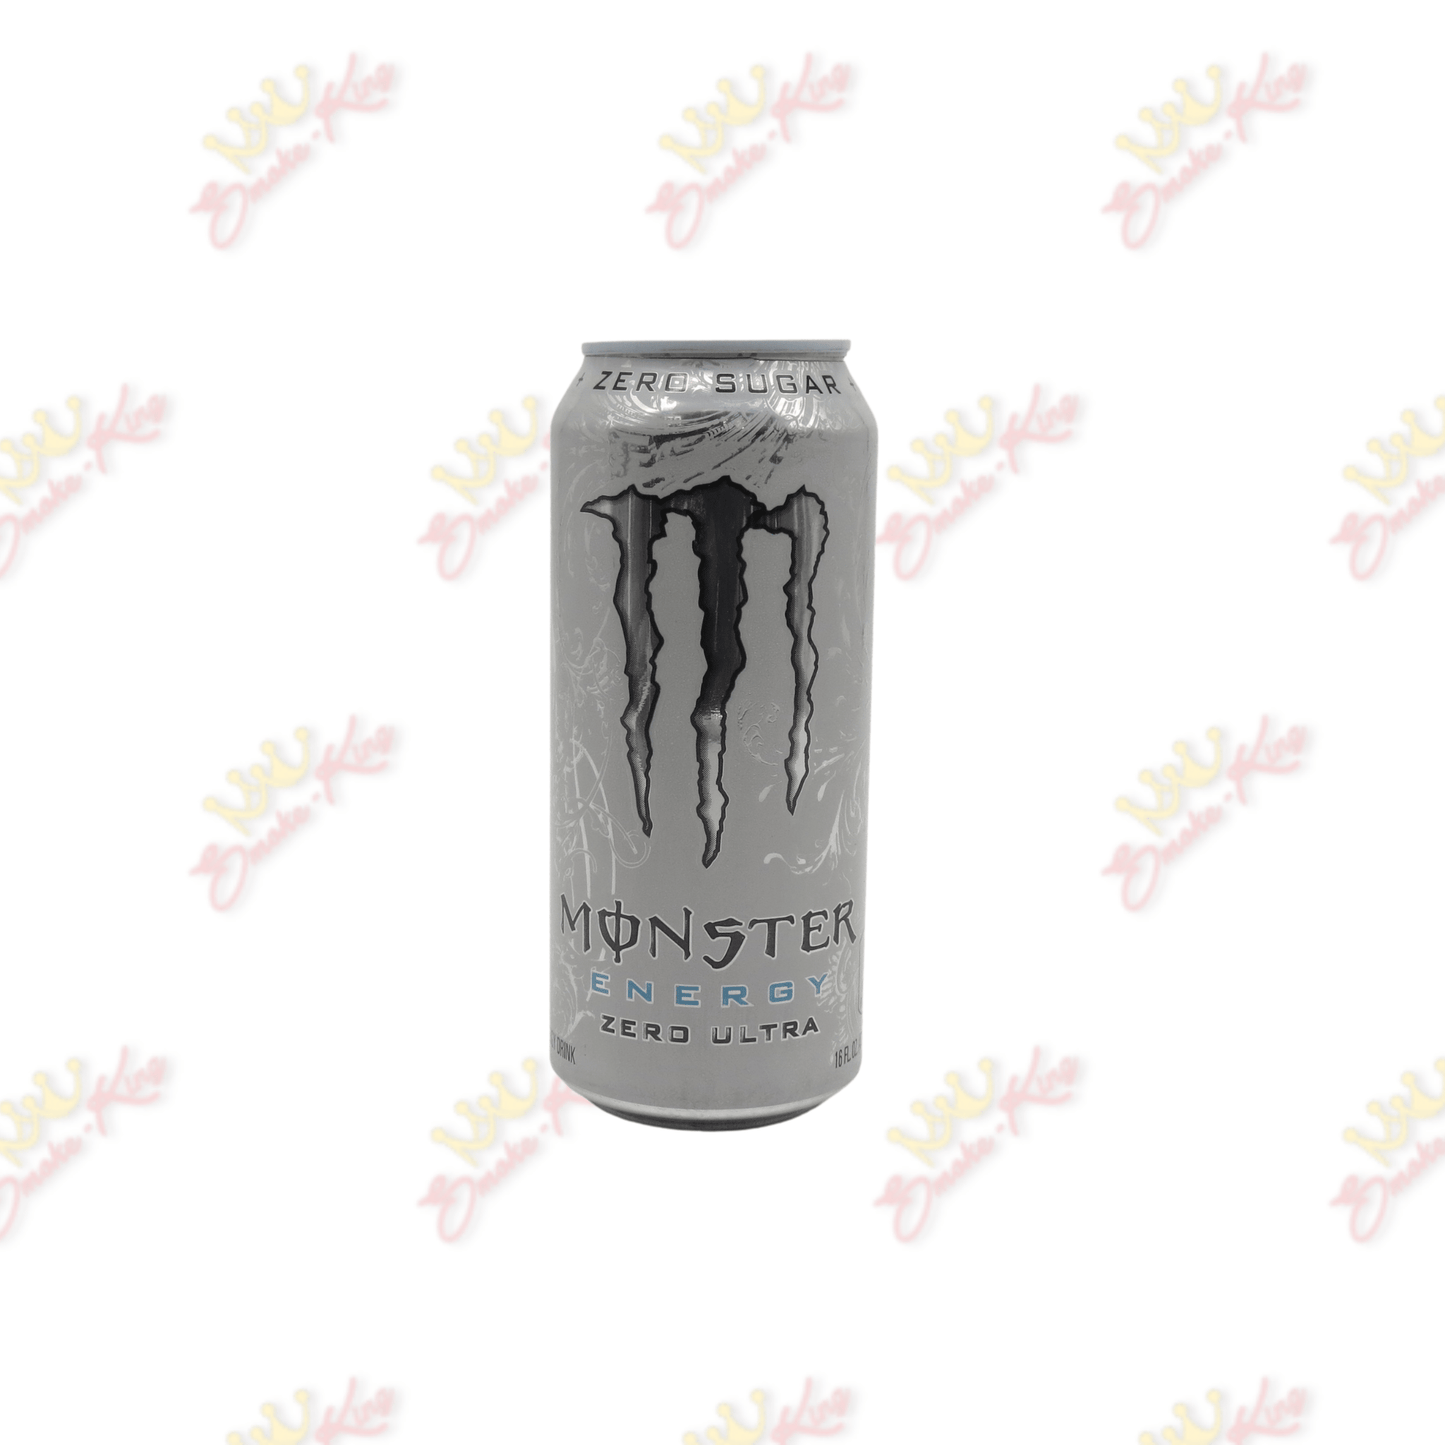 Smoke-king secret stash cans Monster Zero secret stash can